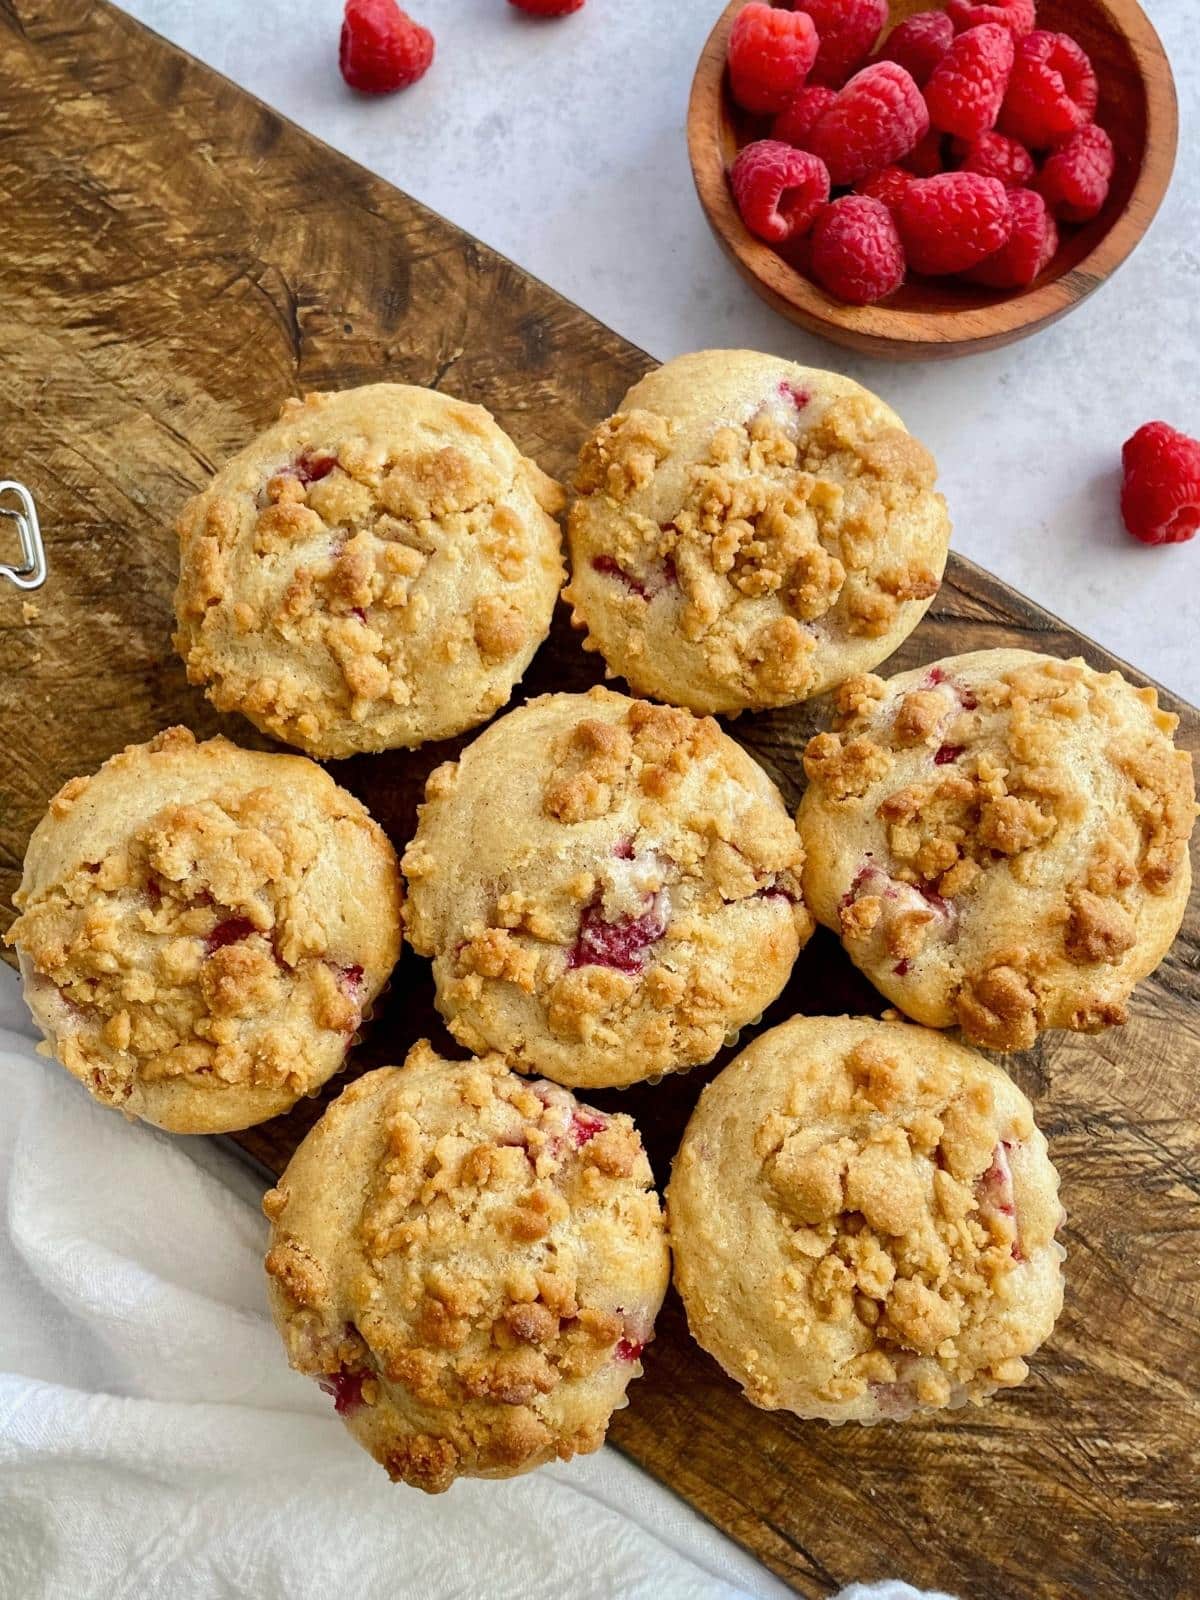 Raspberry muffins on a cutting board.